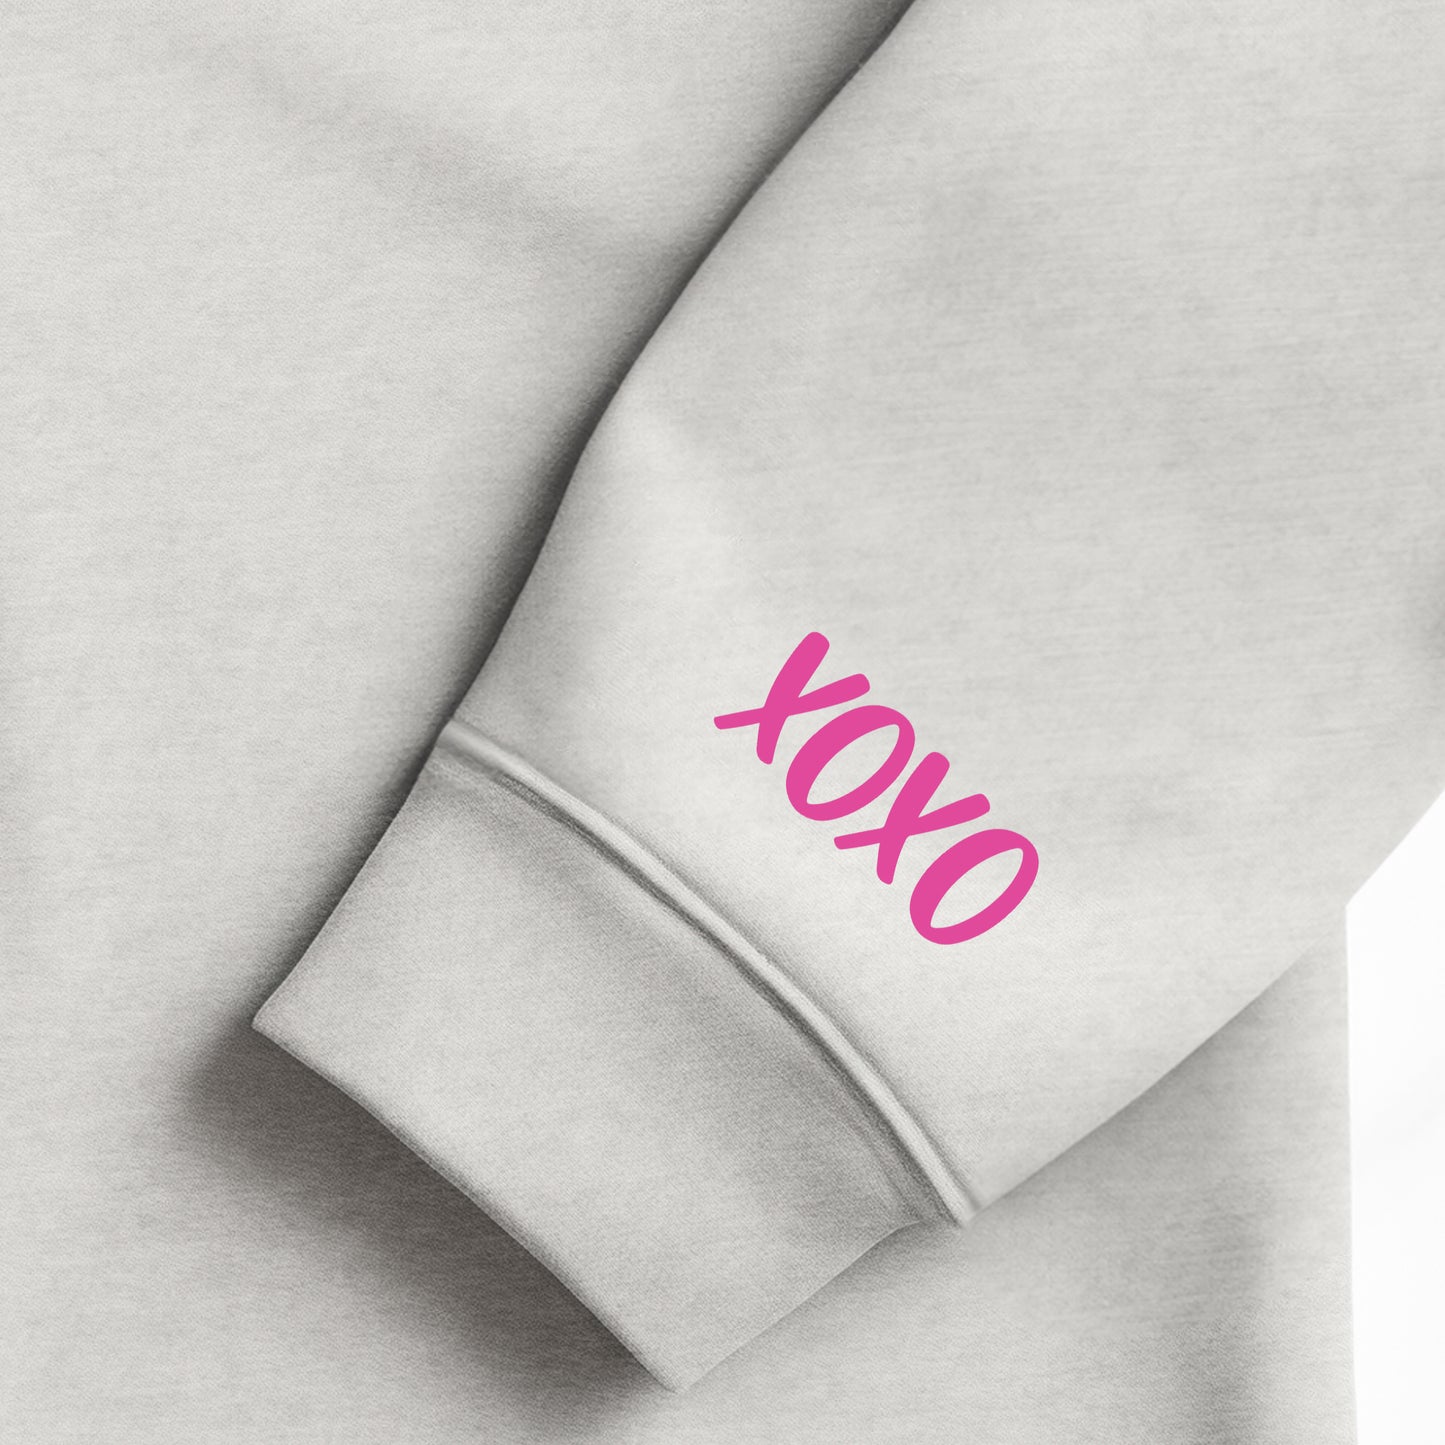 XOXO (Pocket/Sleeve)- Single Color (bright pink)- 2" wide Plastisol Screen Print Transfer